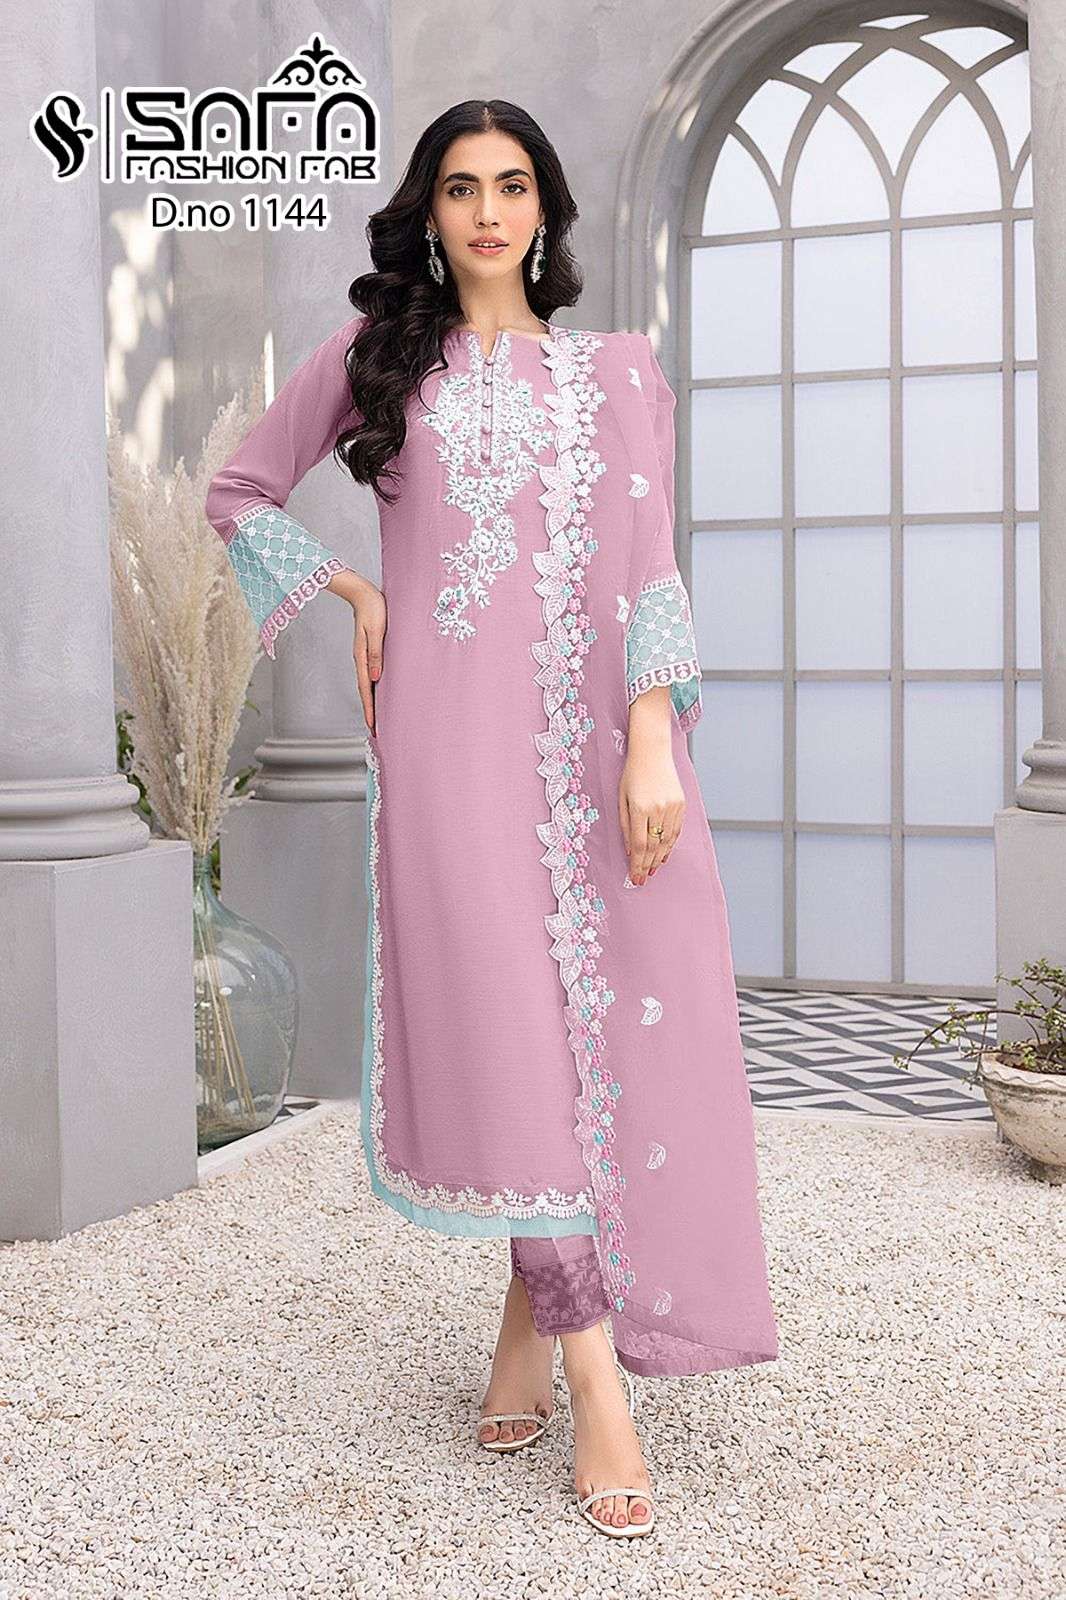 Punjabi Suit For Mehndi buy online - New Arrivals